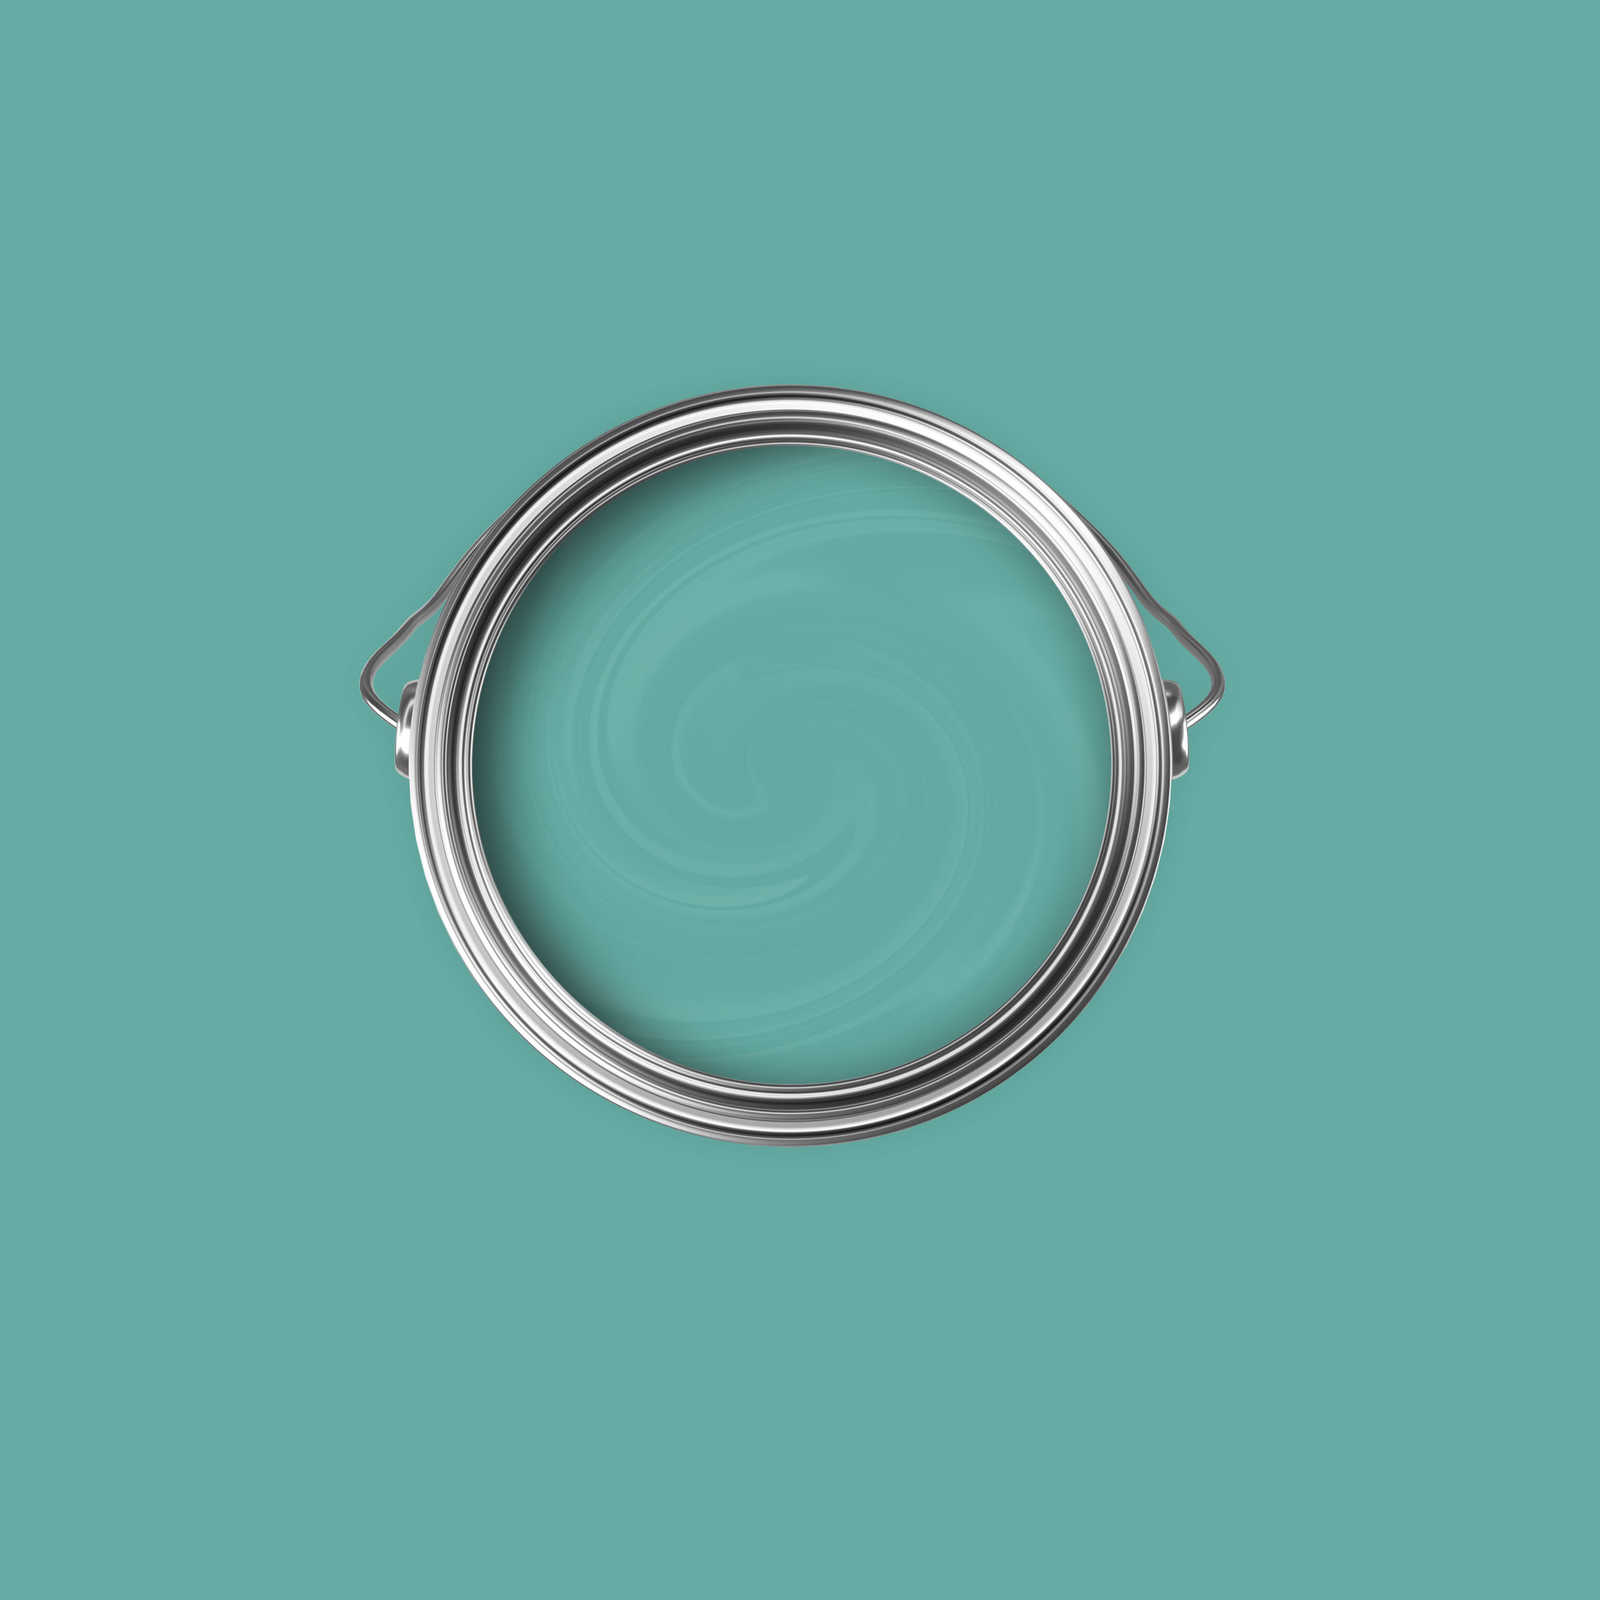             Premium Muurverf Radiant Mint »Expressive Emerald« NW407 – 2,5 Liter
        